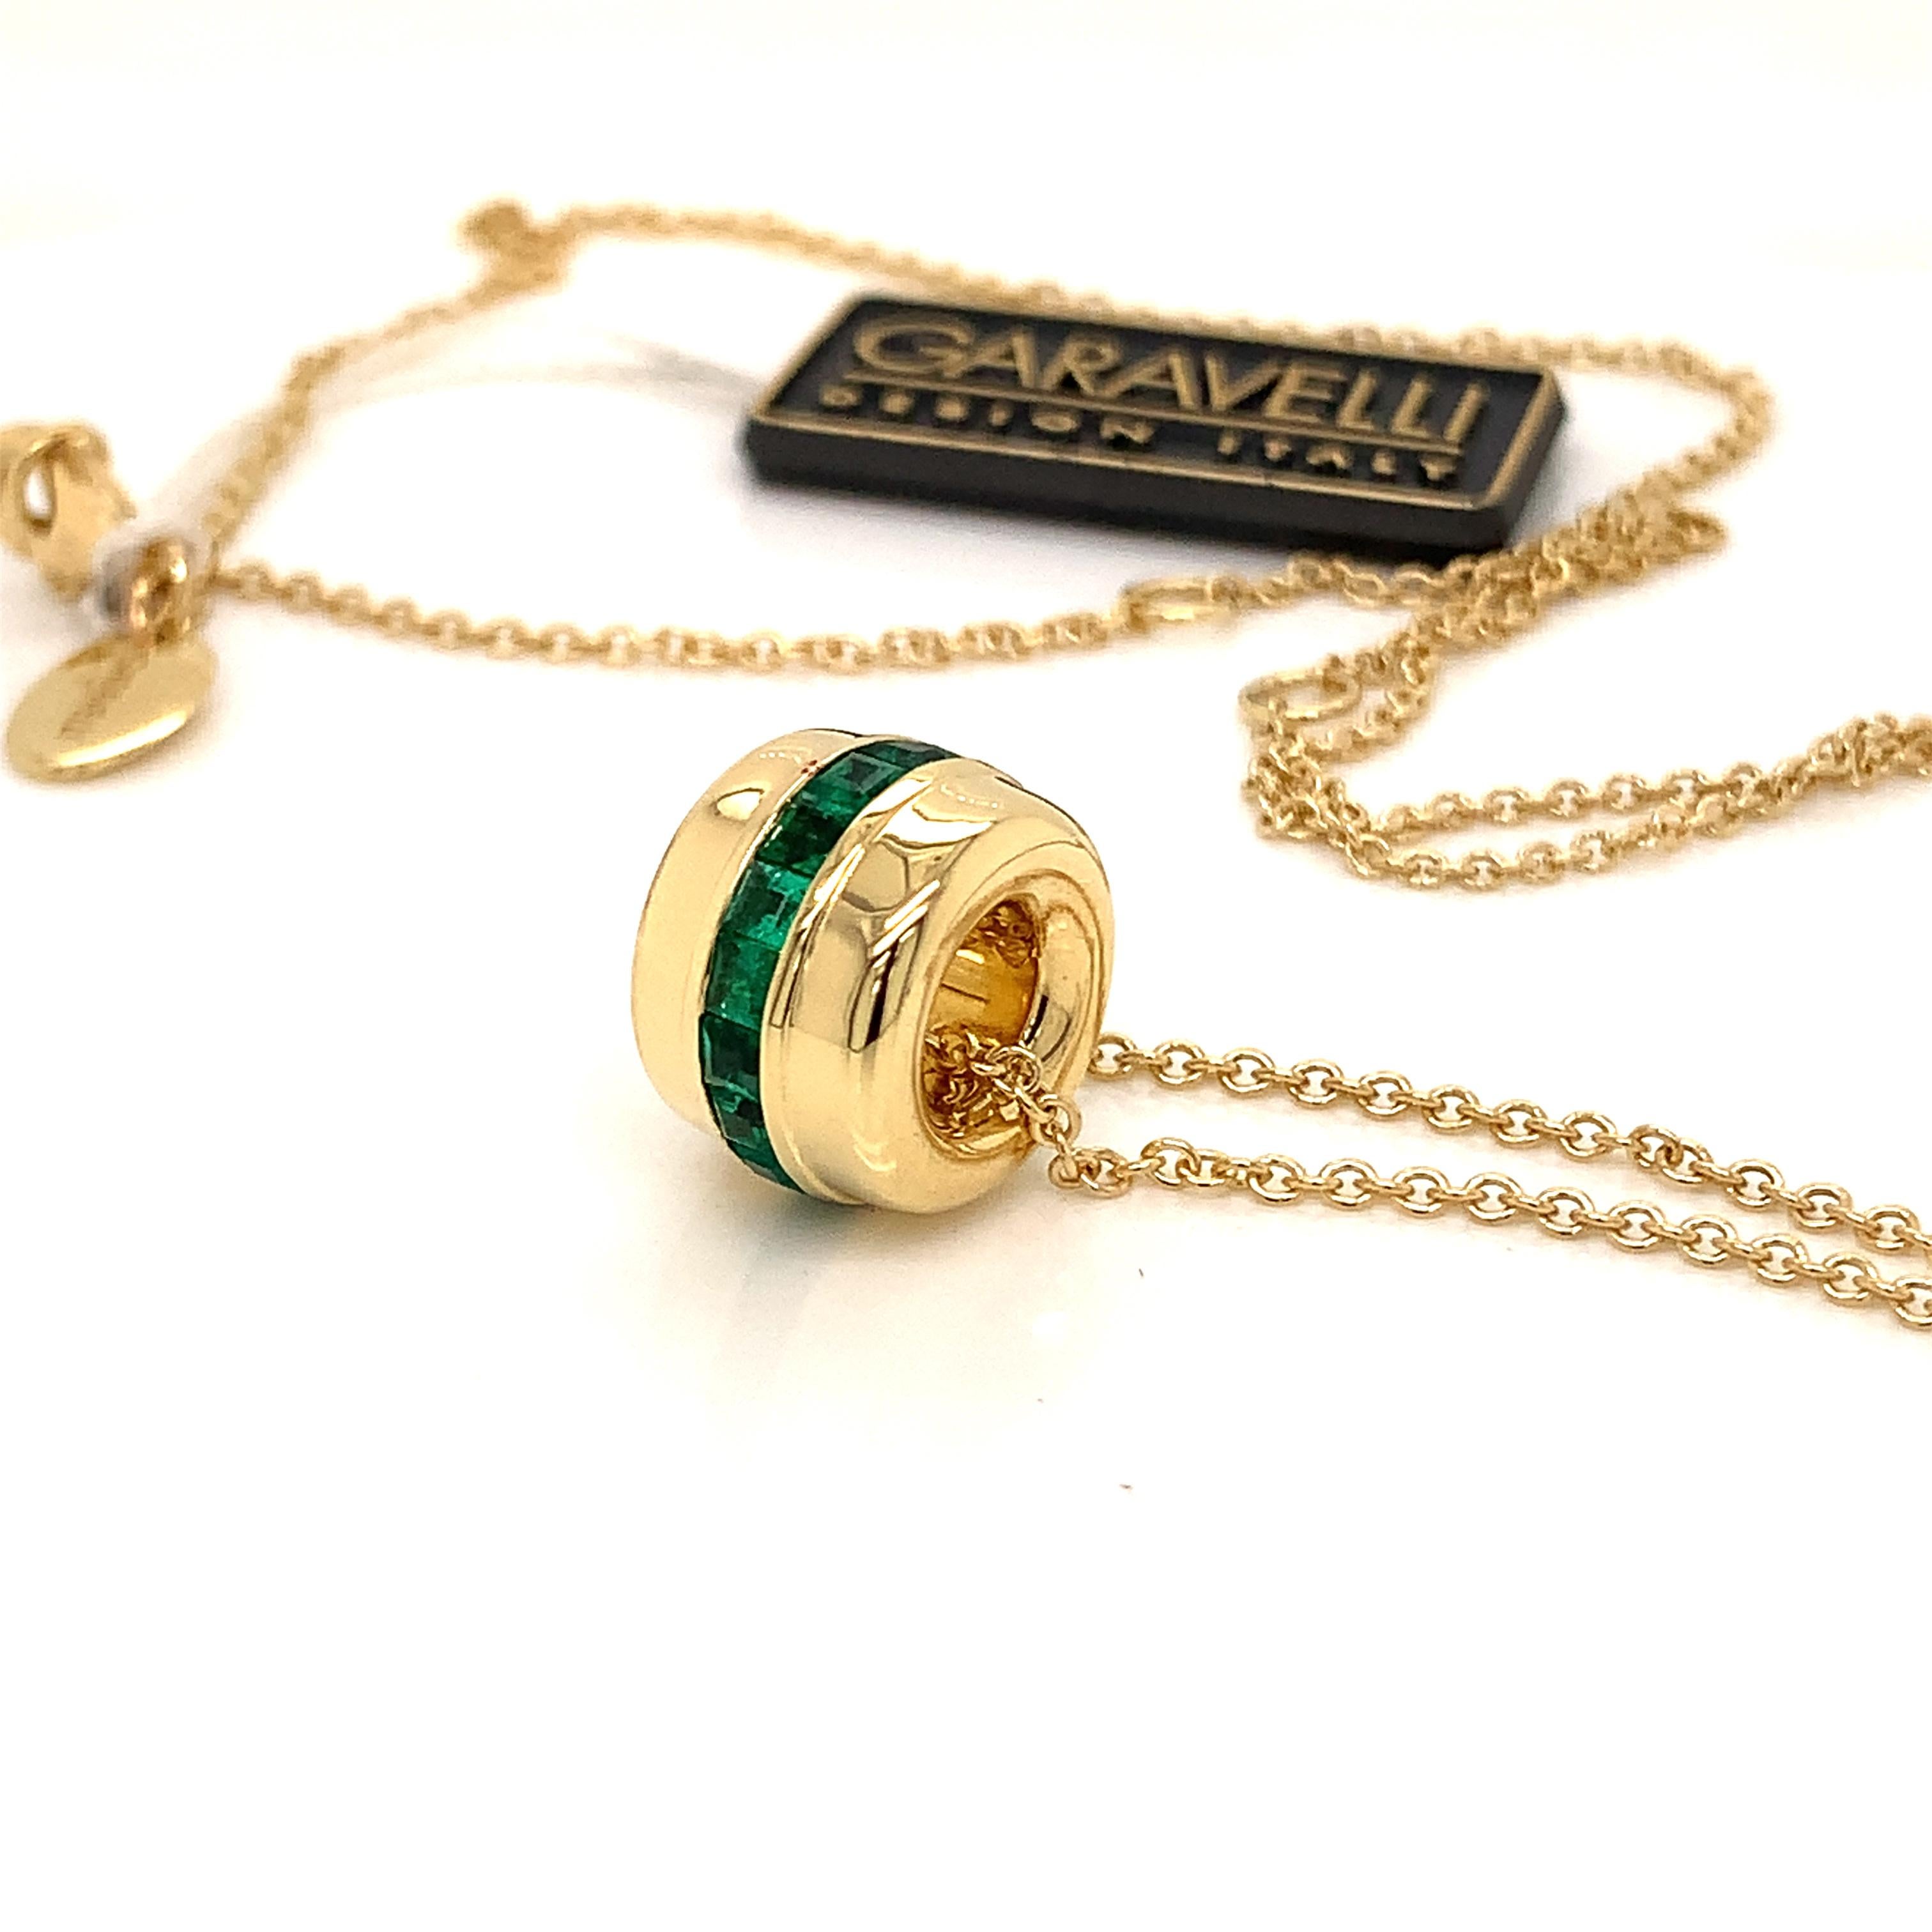 18 Karat Yellow Gold Carre Emeralds Garavelli Pendant with Chain 2